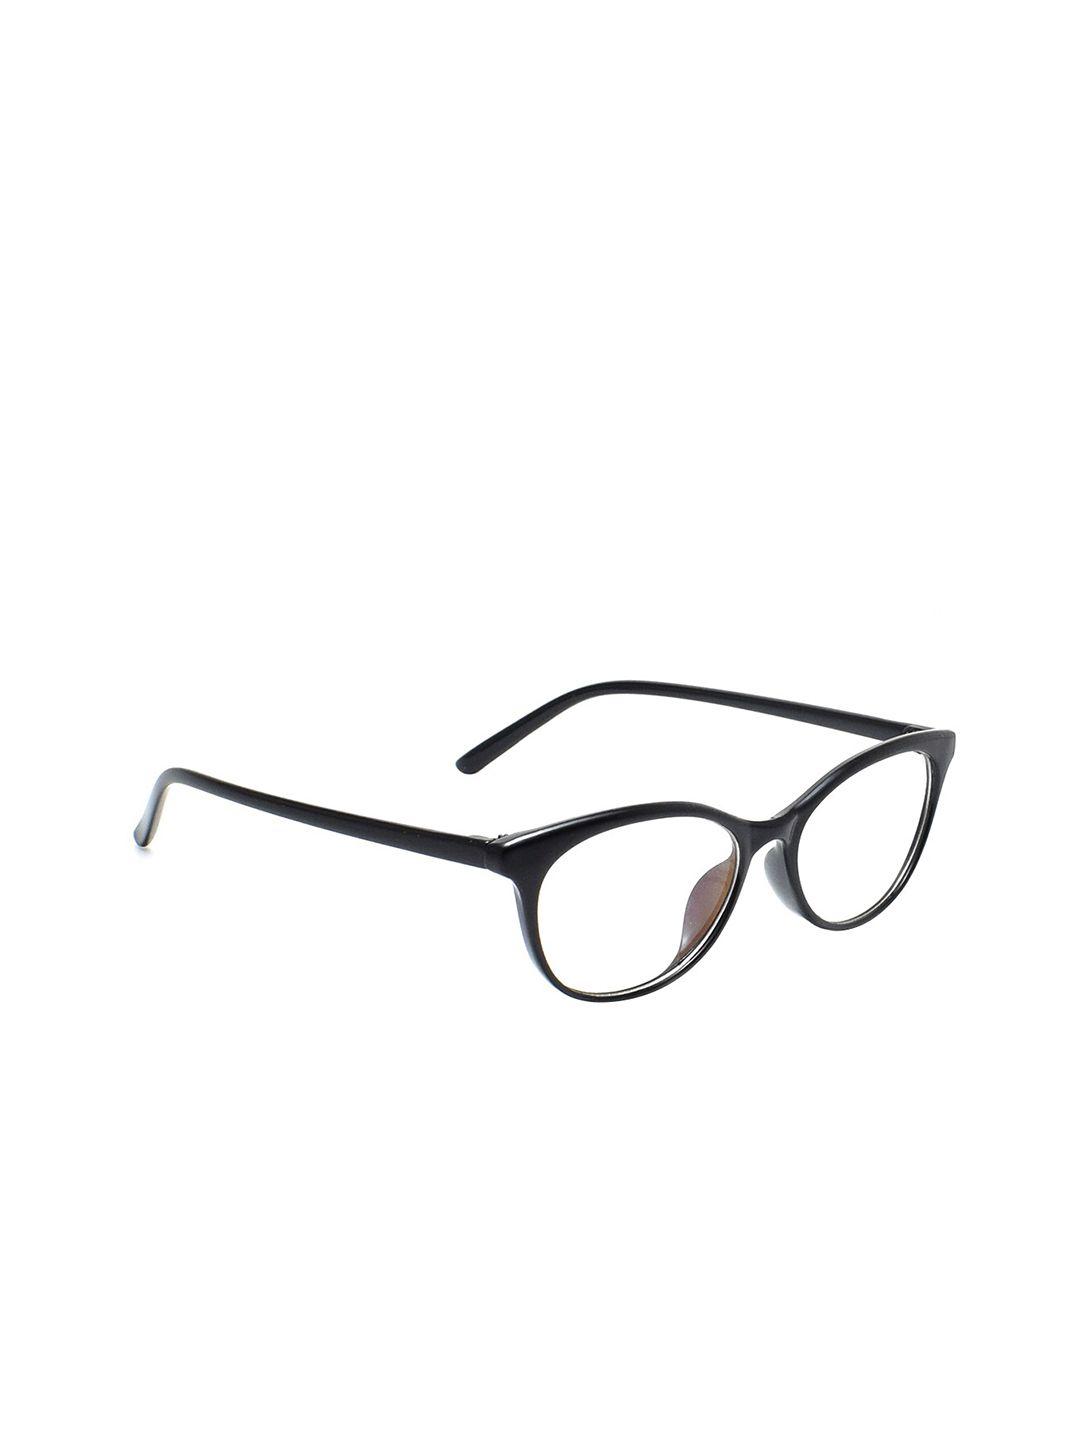 peter jones eyewear women black  & transparent anti glare glasses  full rim cateye frames